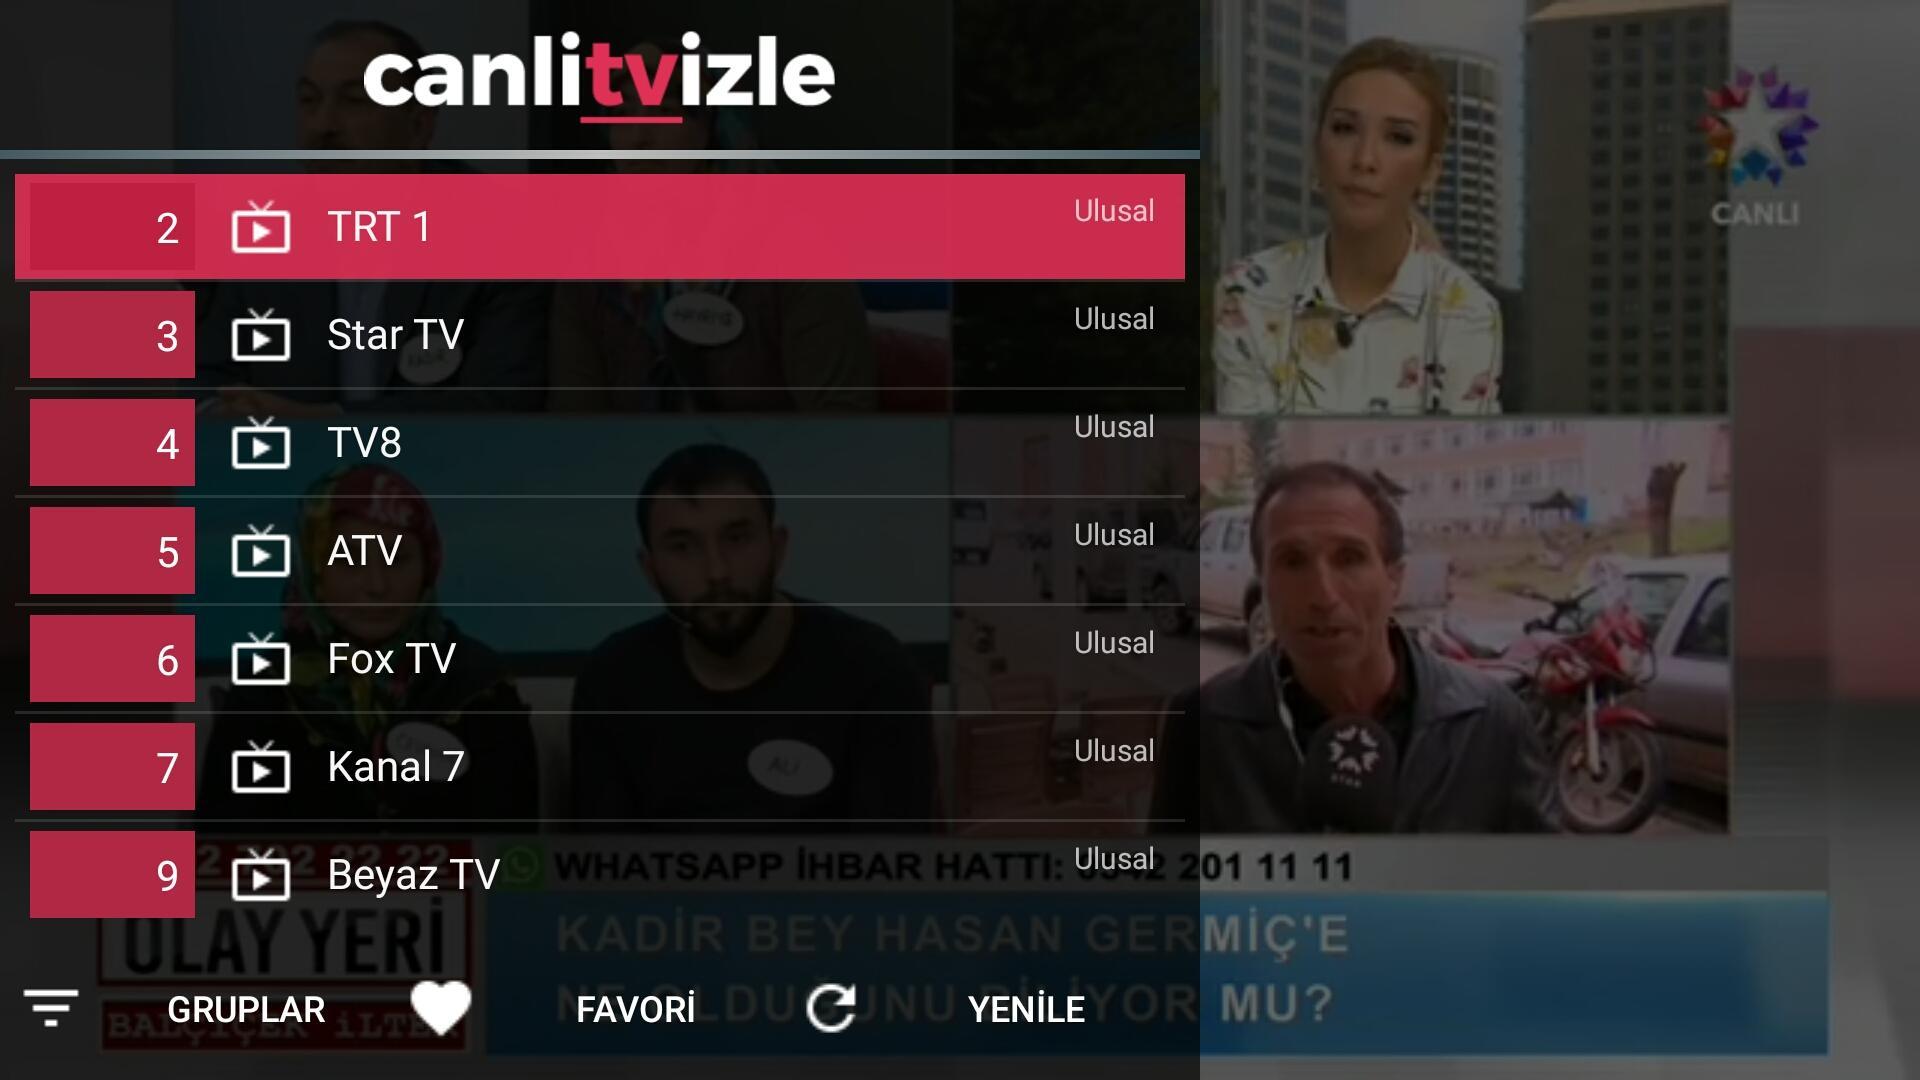 Canlı TV İzle - Canlitvizle.com APK for Android Download